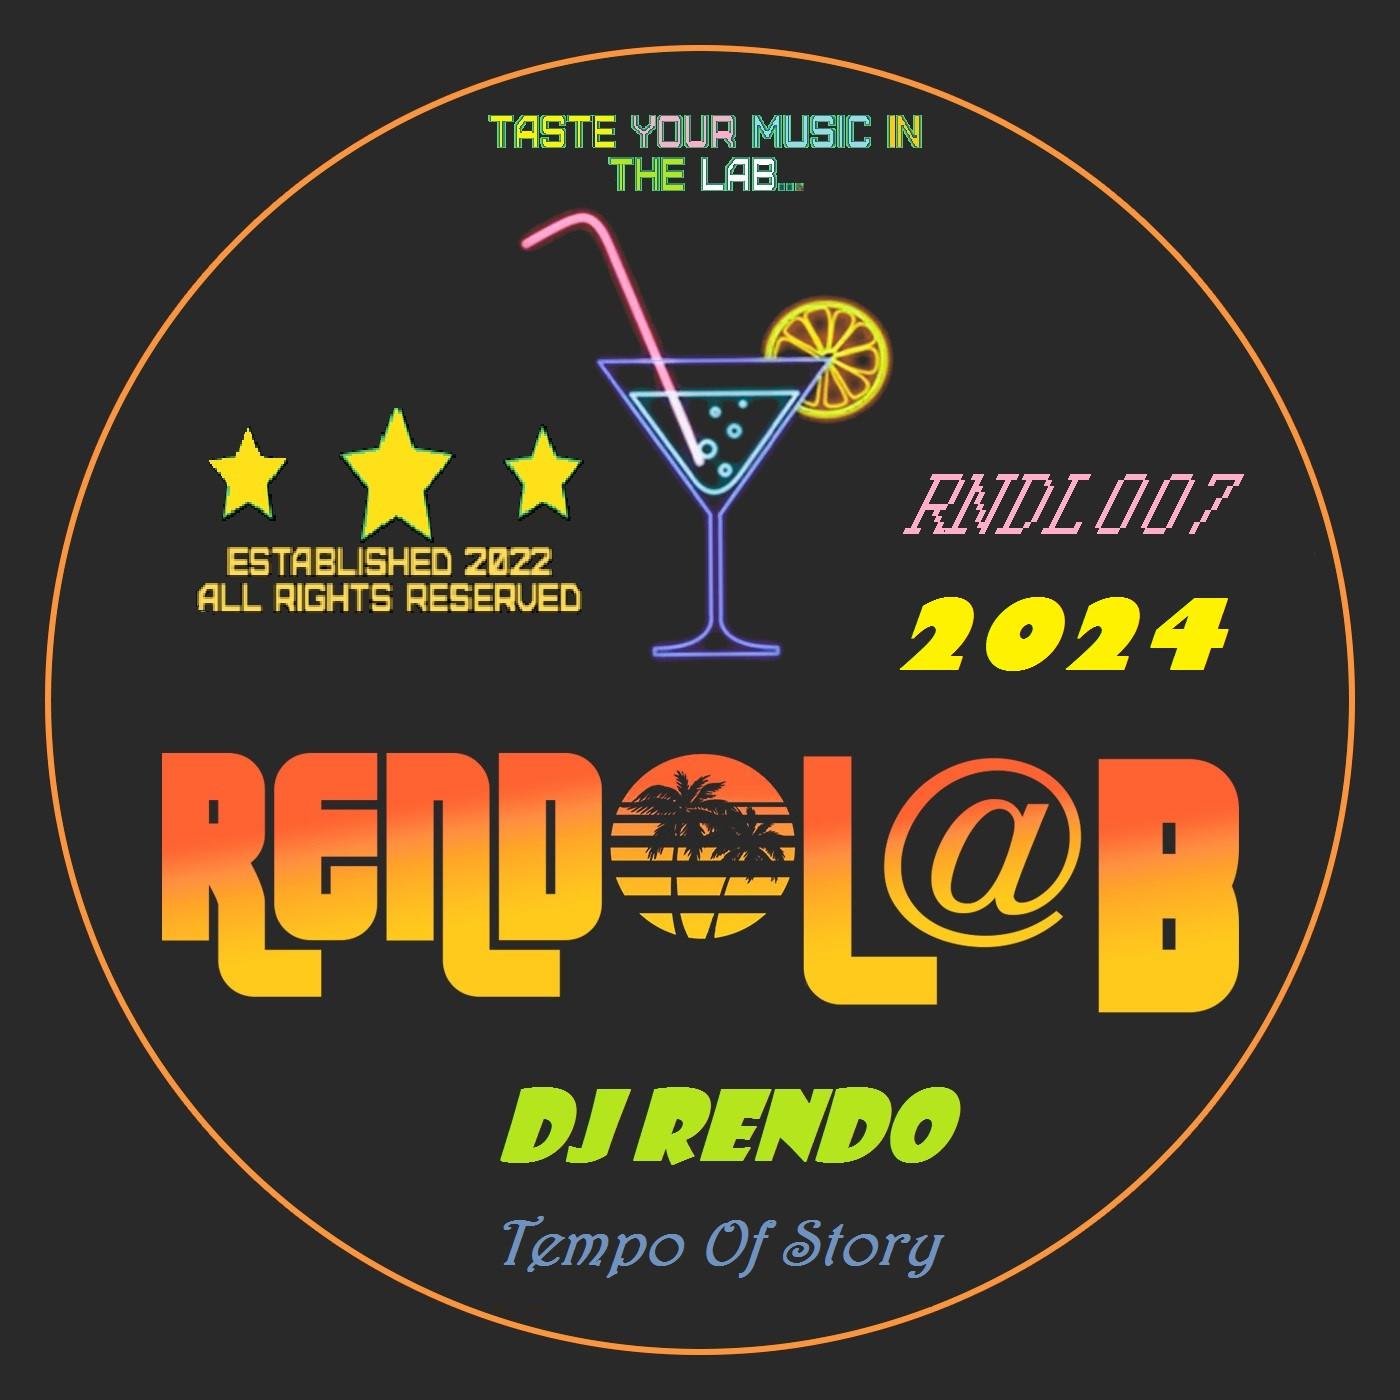 Dj Rendo - Tempo Of Story